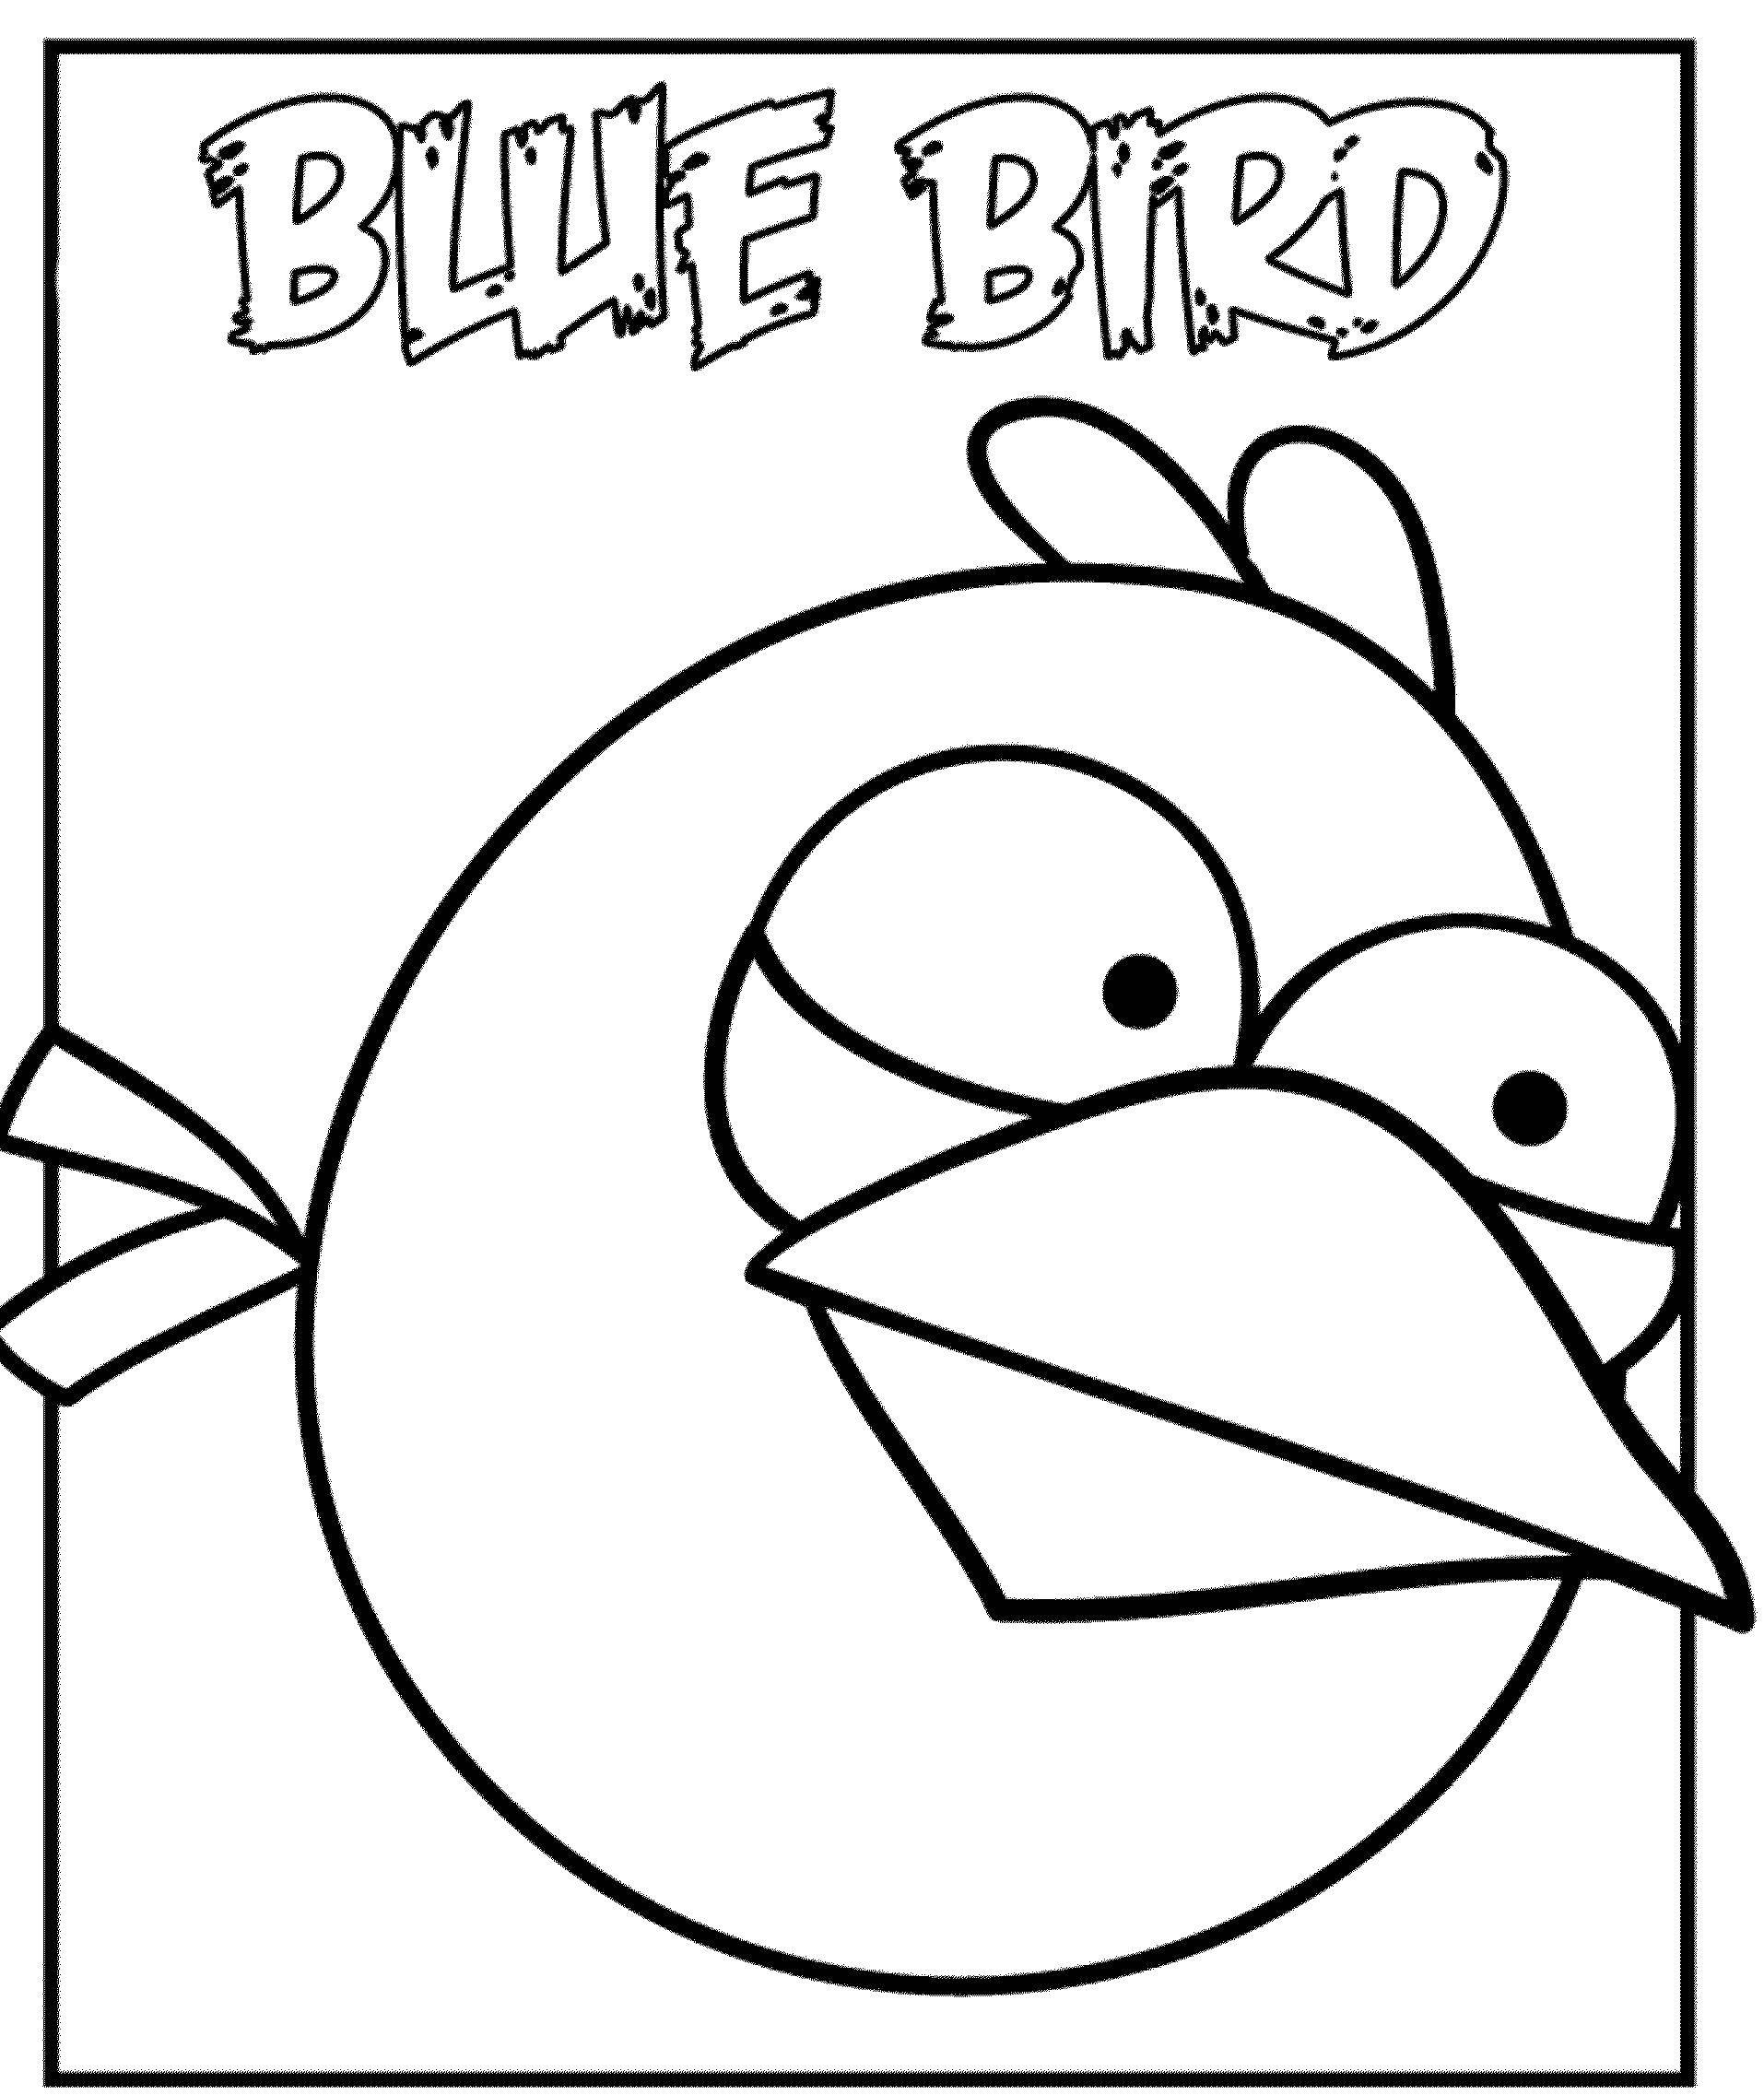 Coloring Blue bird. Category angry birds. Tags:  bird, beak.